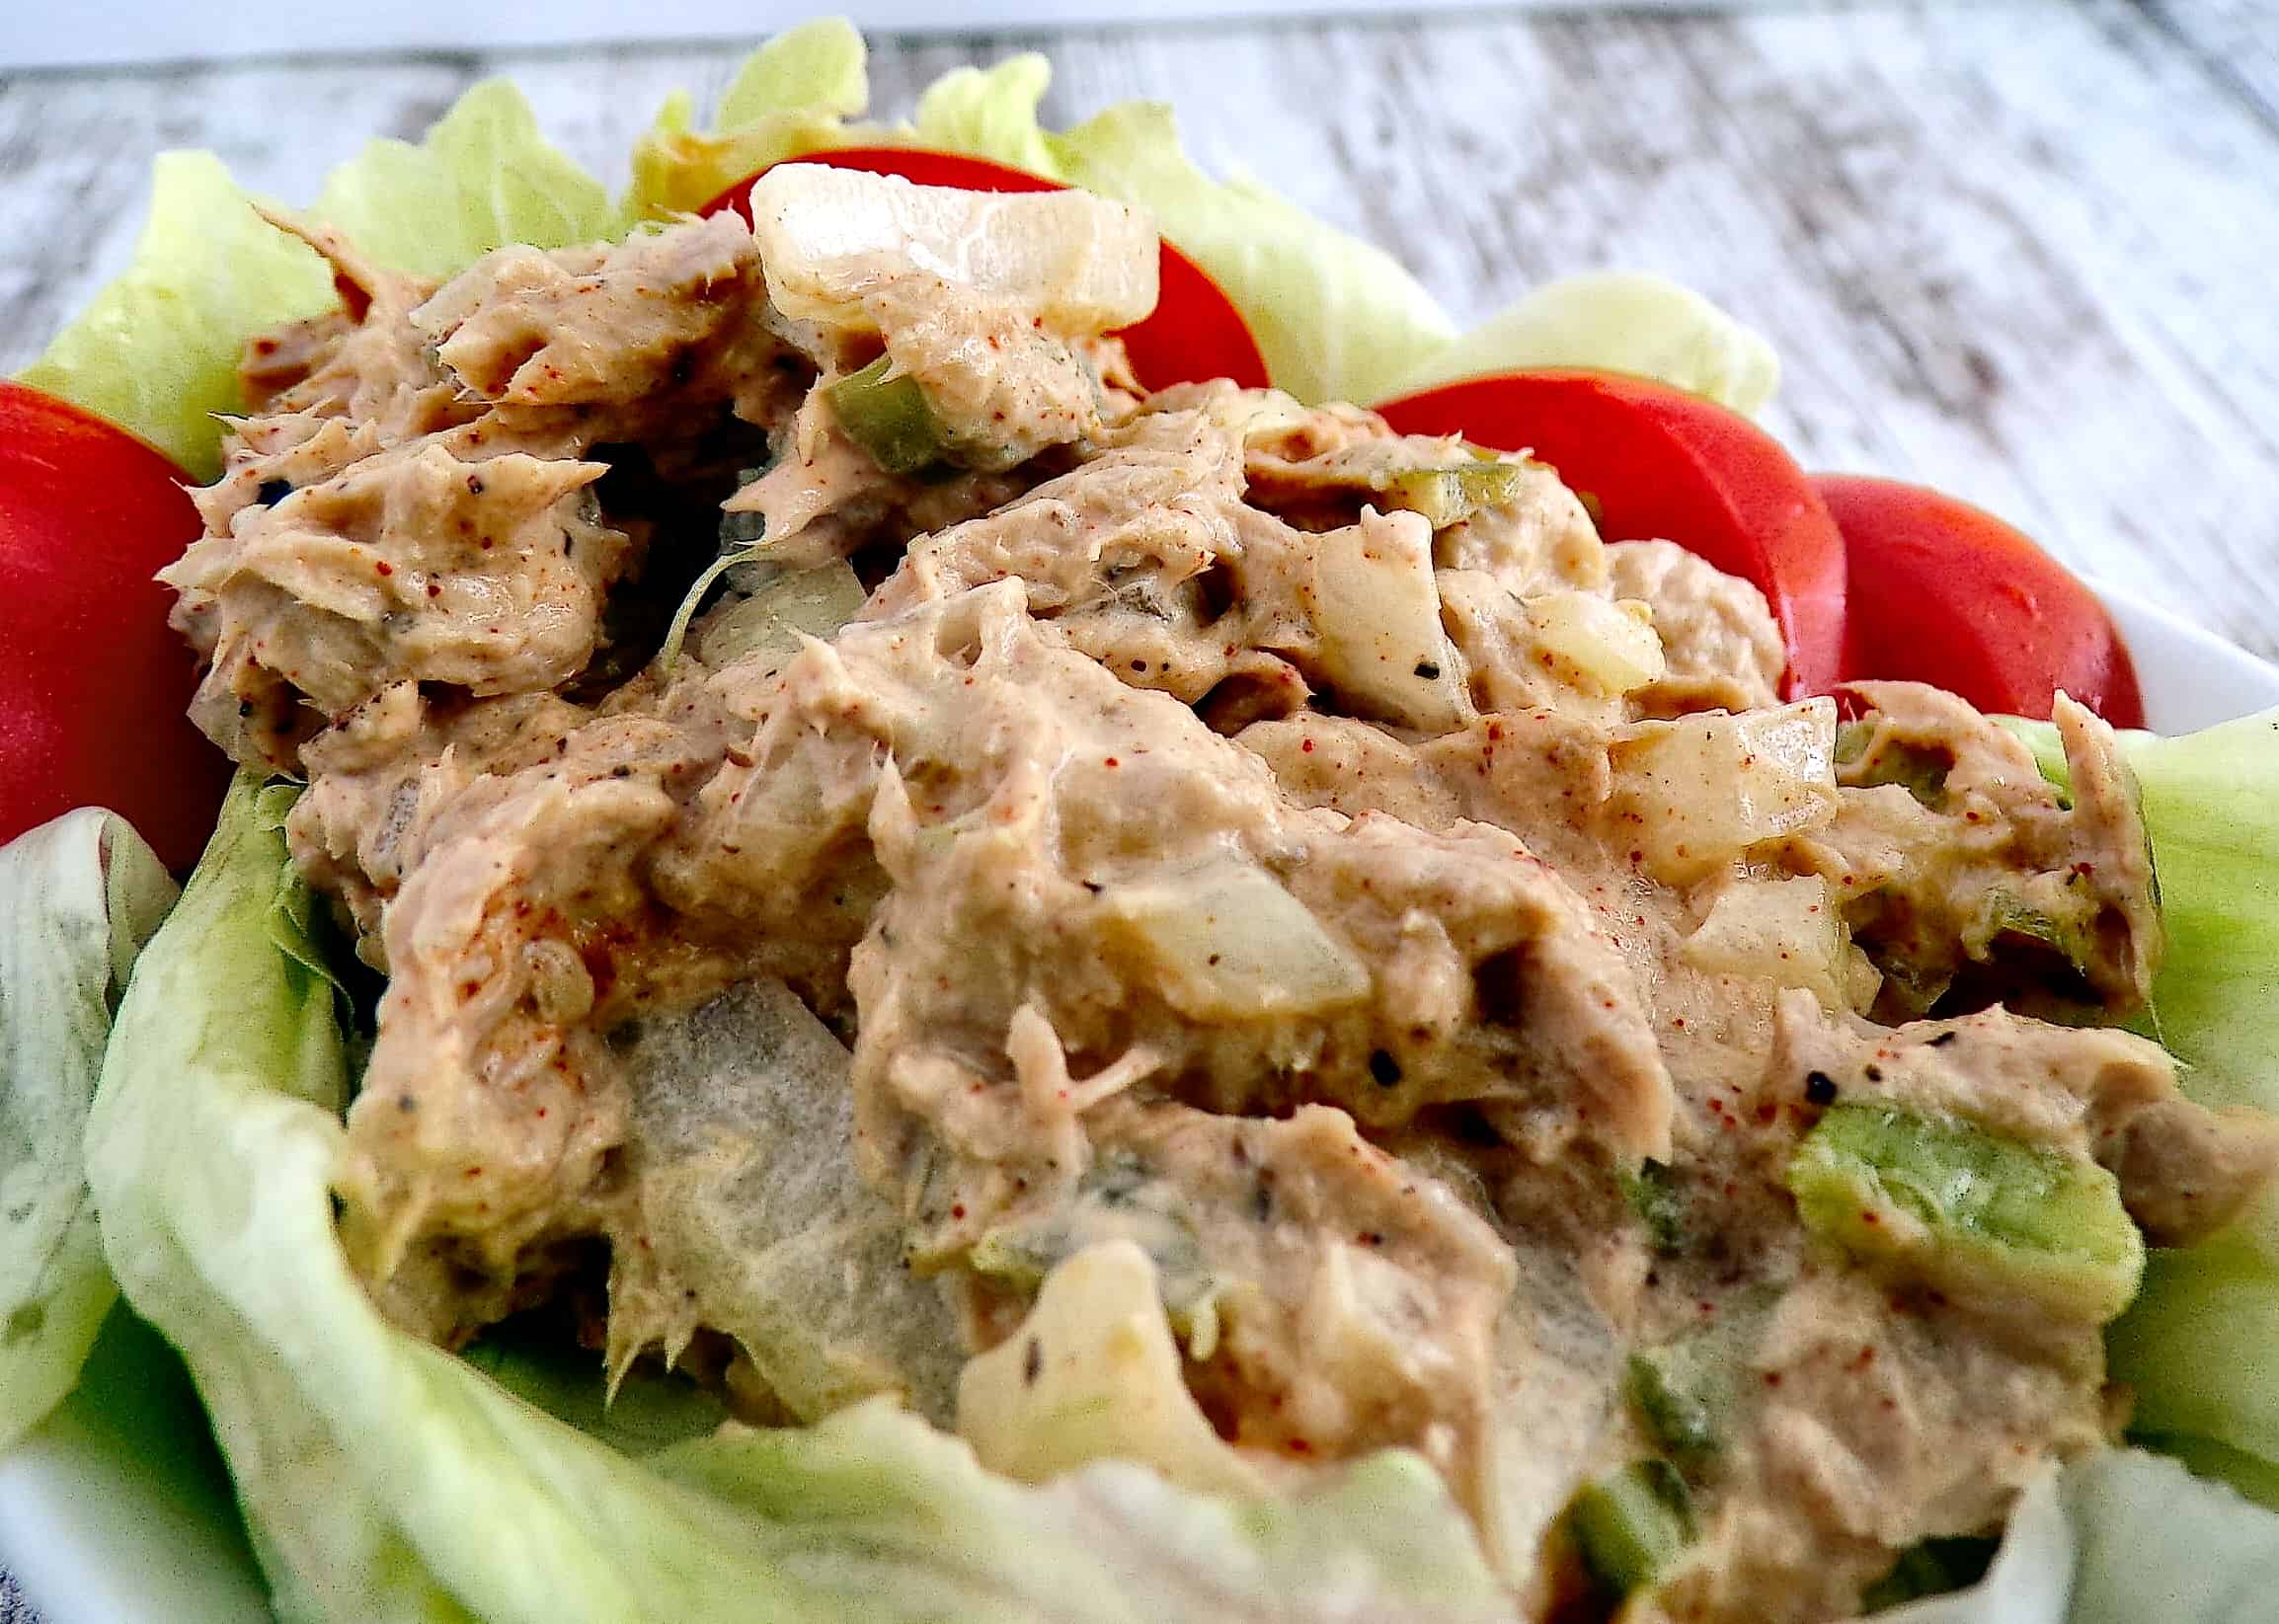 Low sodium tuna fish salad on lettuce